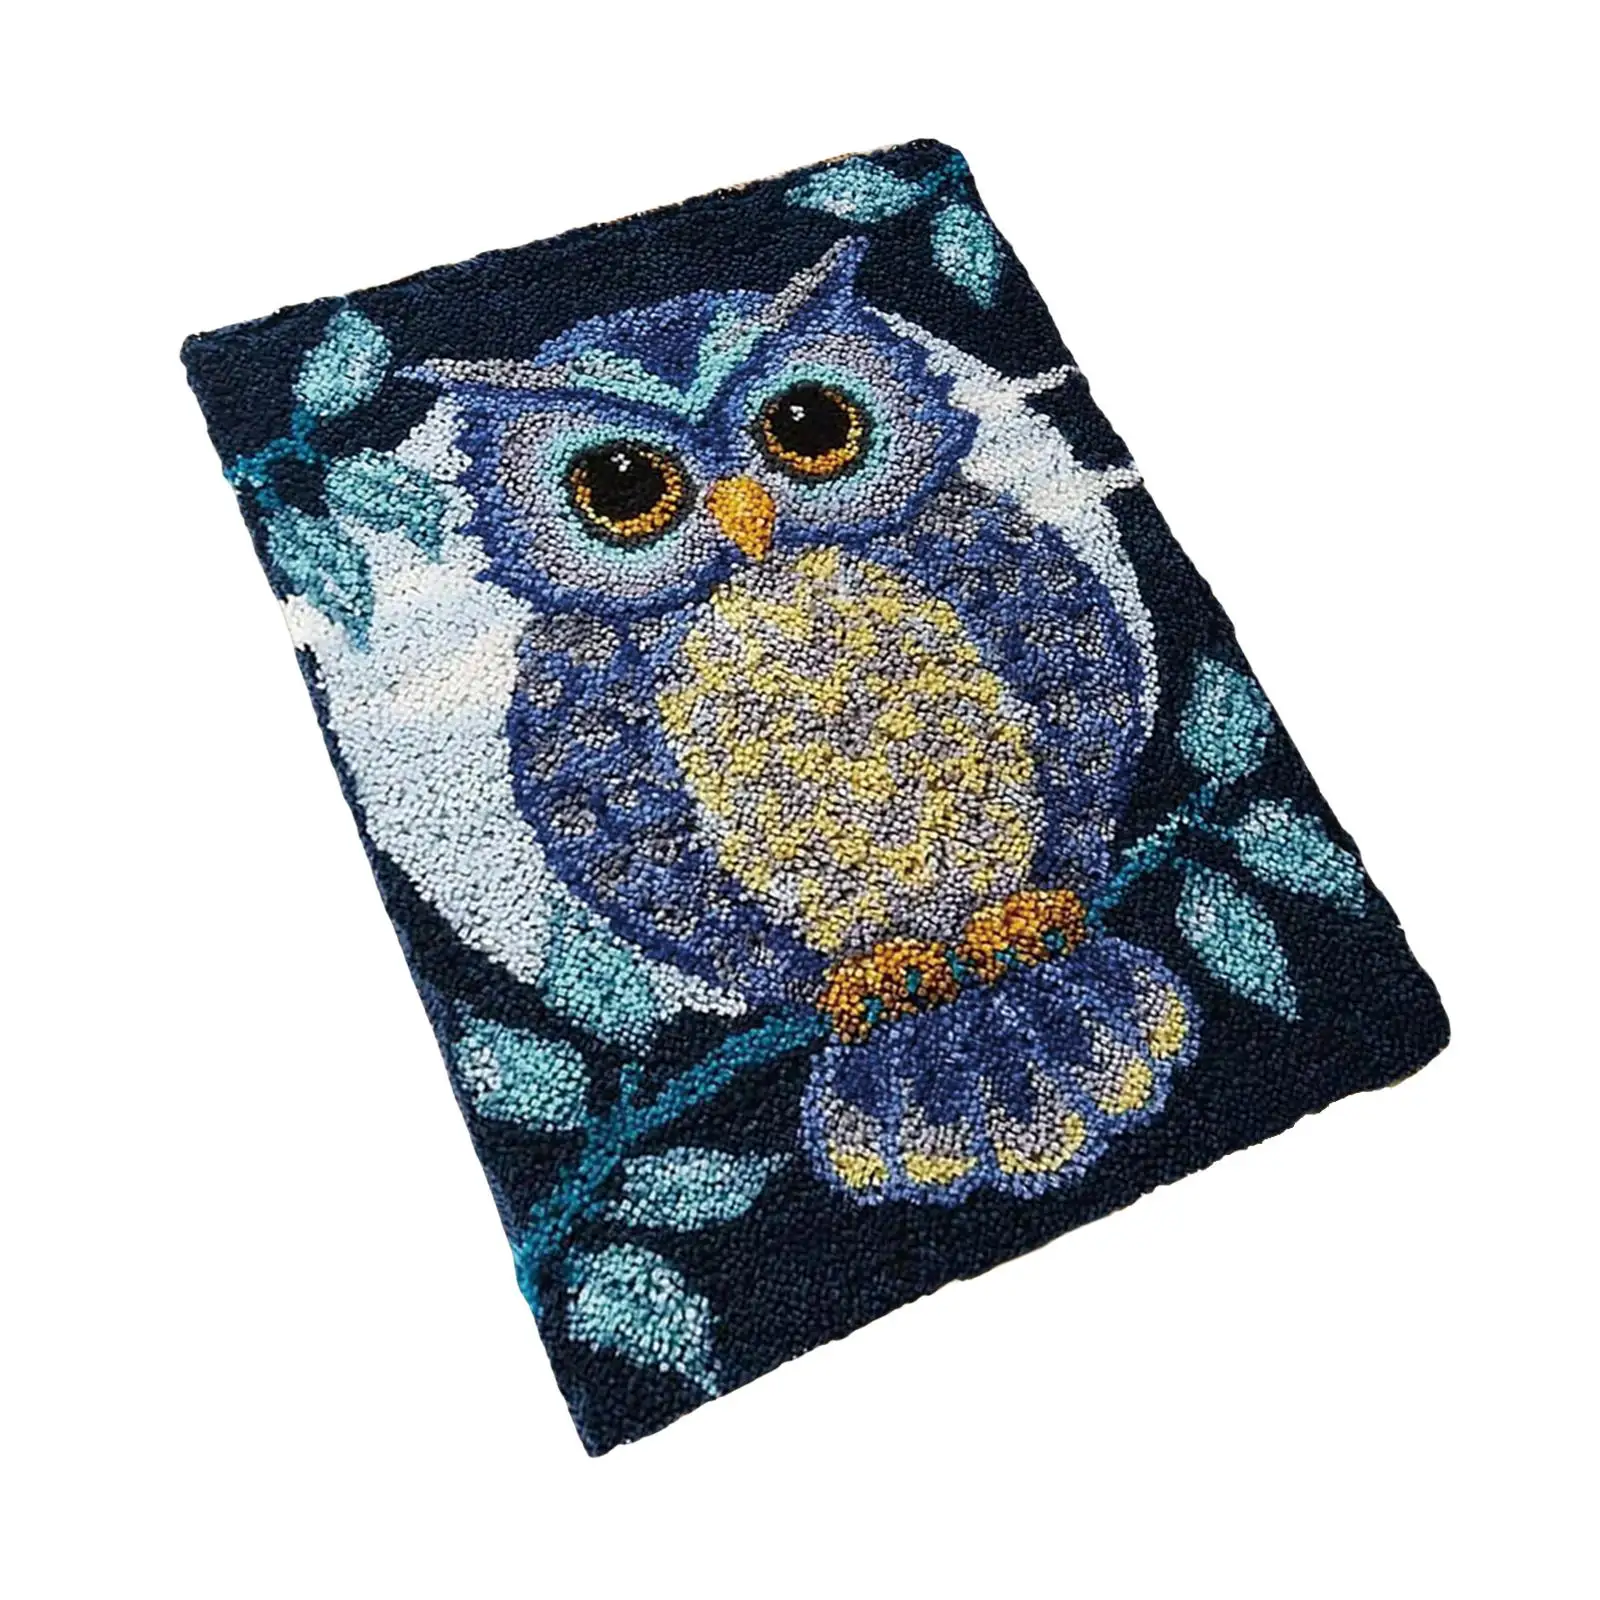 Owl Latch Hook Rug Kit Handmade Festival Gift Owl Animal Pattern 20 x 14 Carpet Latch Hooking Kits Embroidery Carpet Set